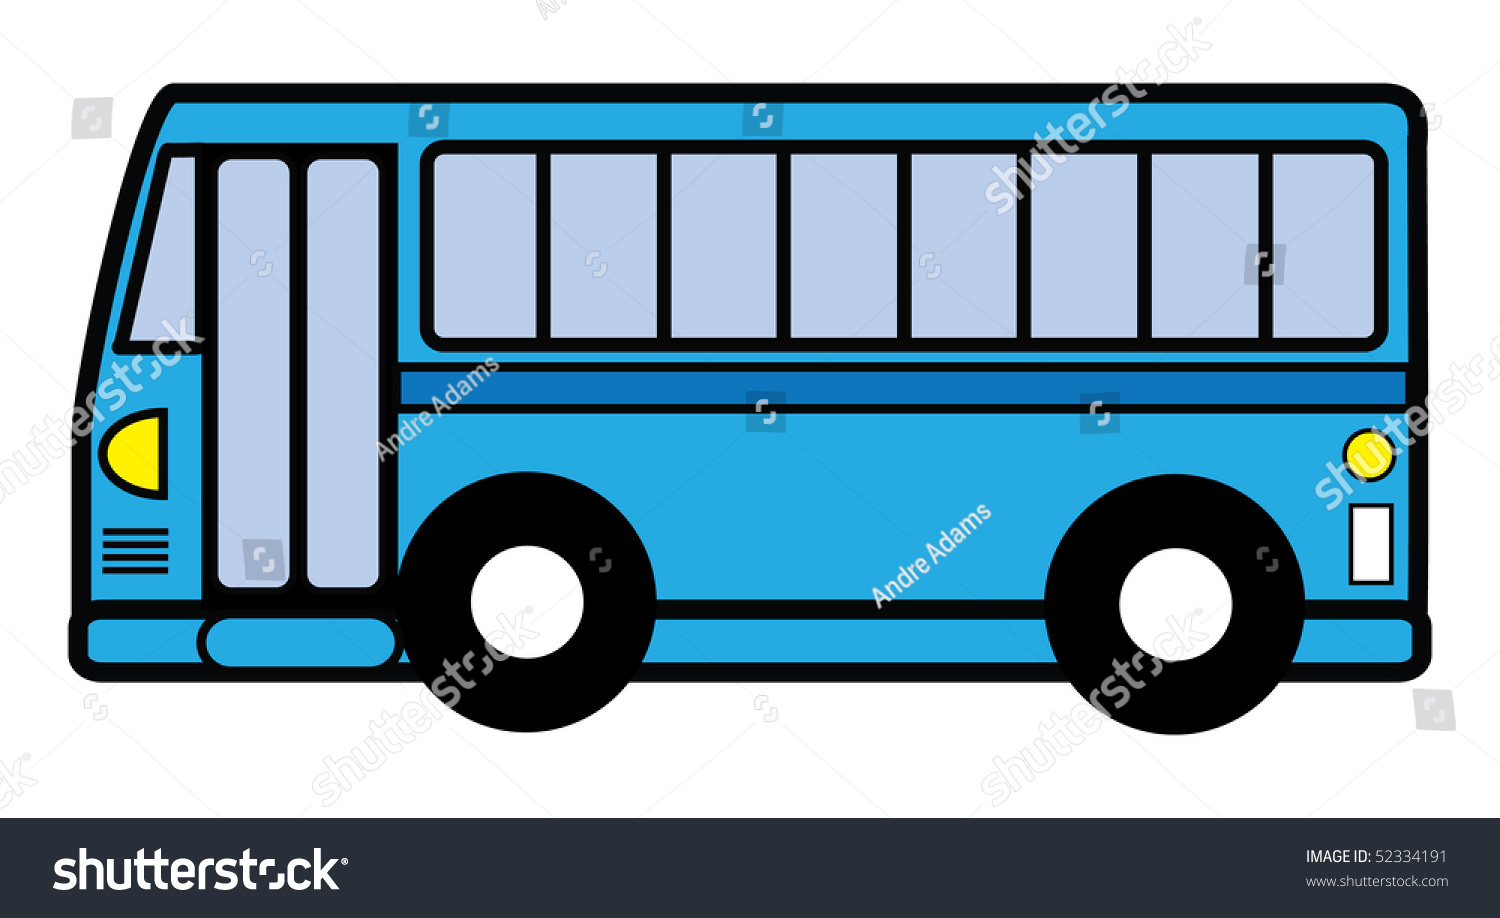 clip art of shuttle bus - photo #38